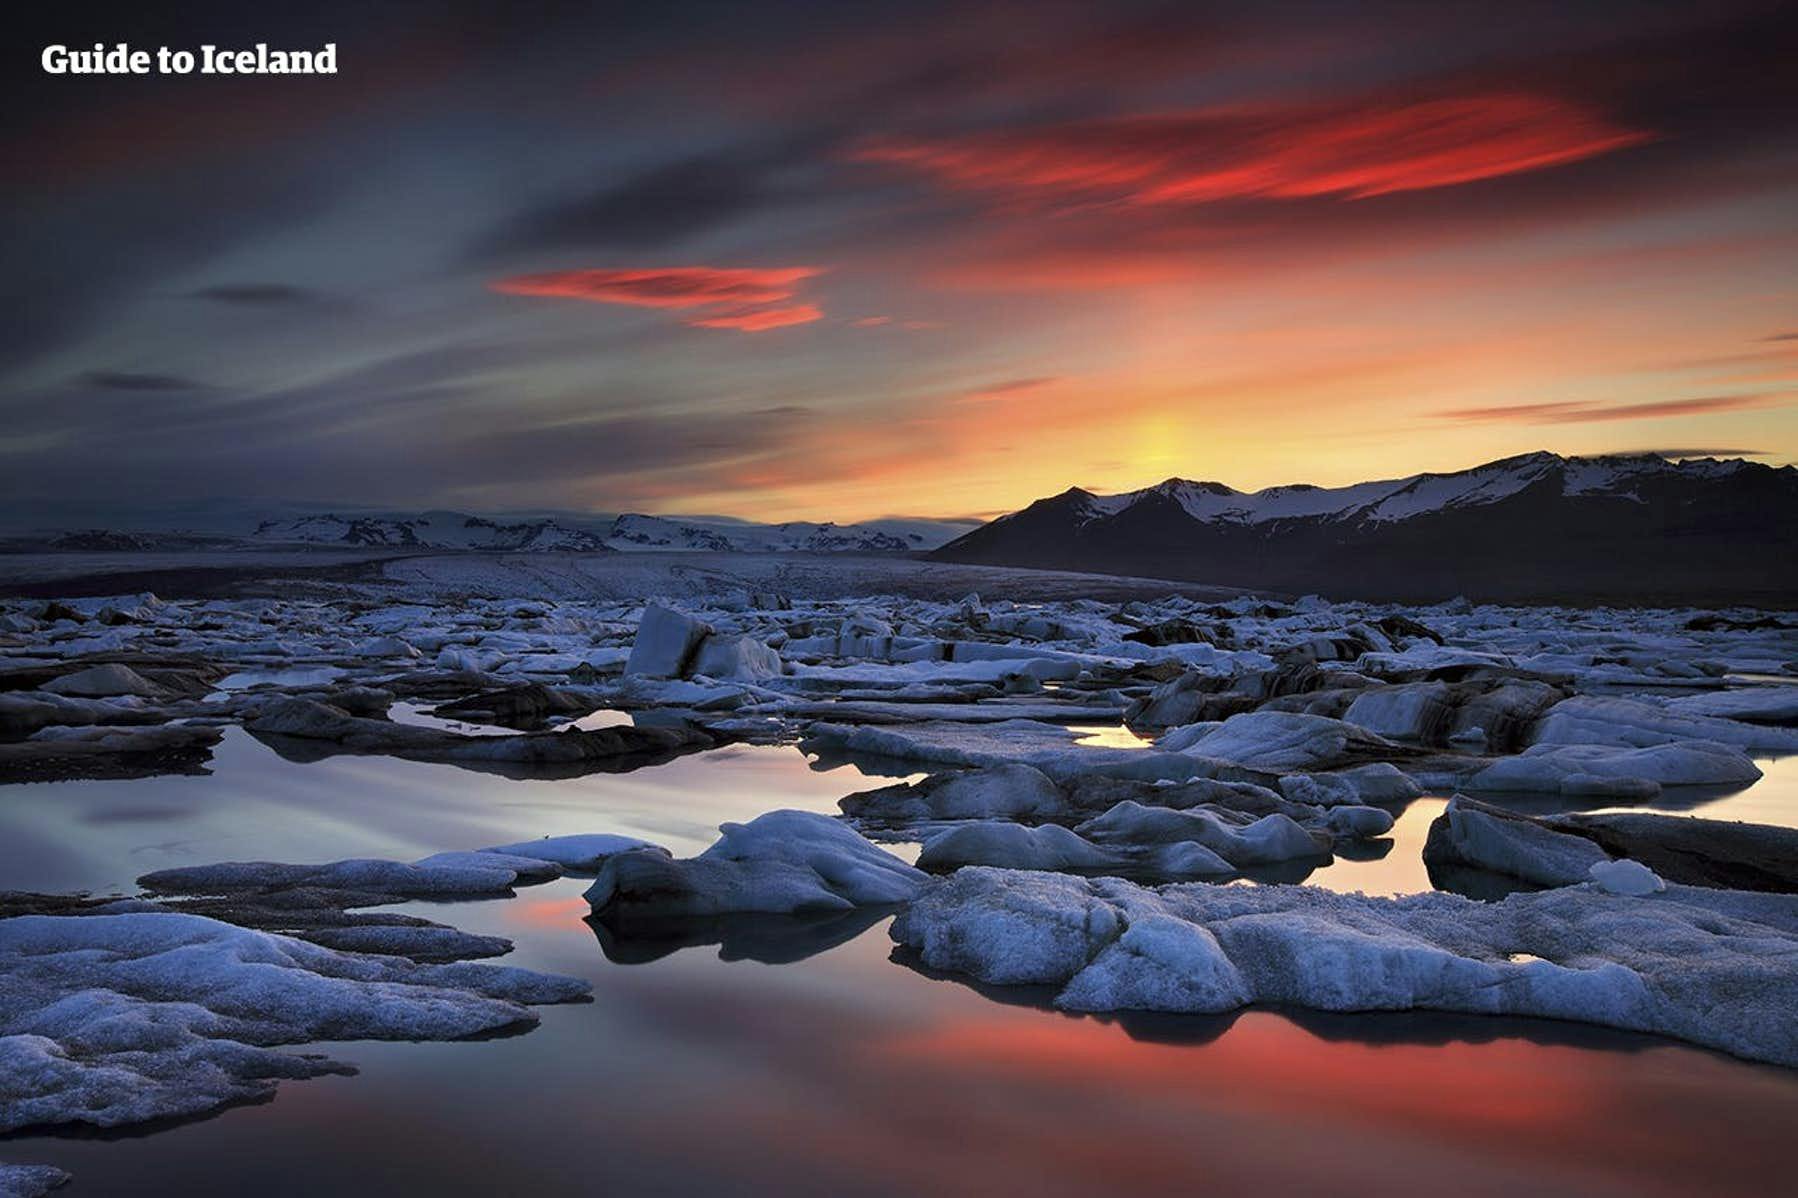 The Jokulsarlon glacier lagoon sits beneath a red sky.